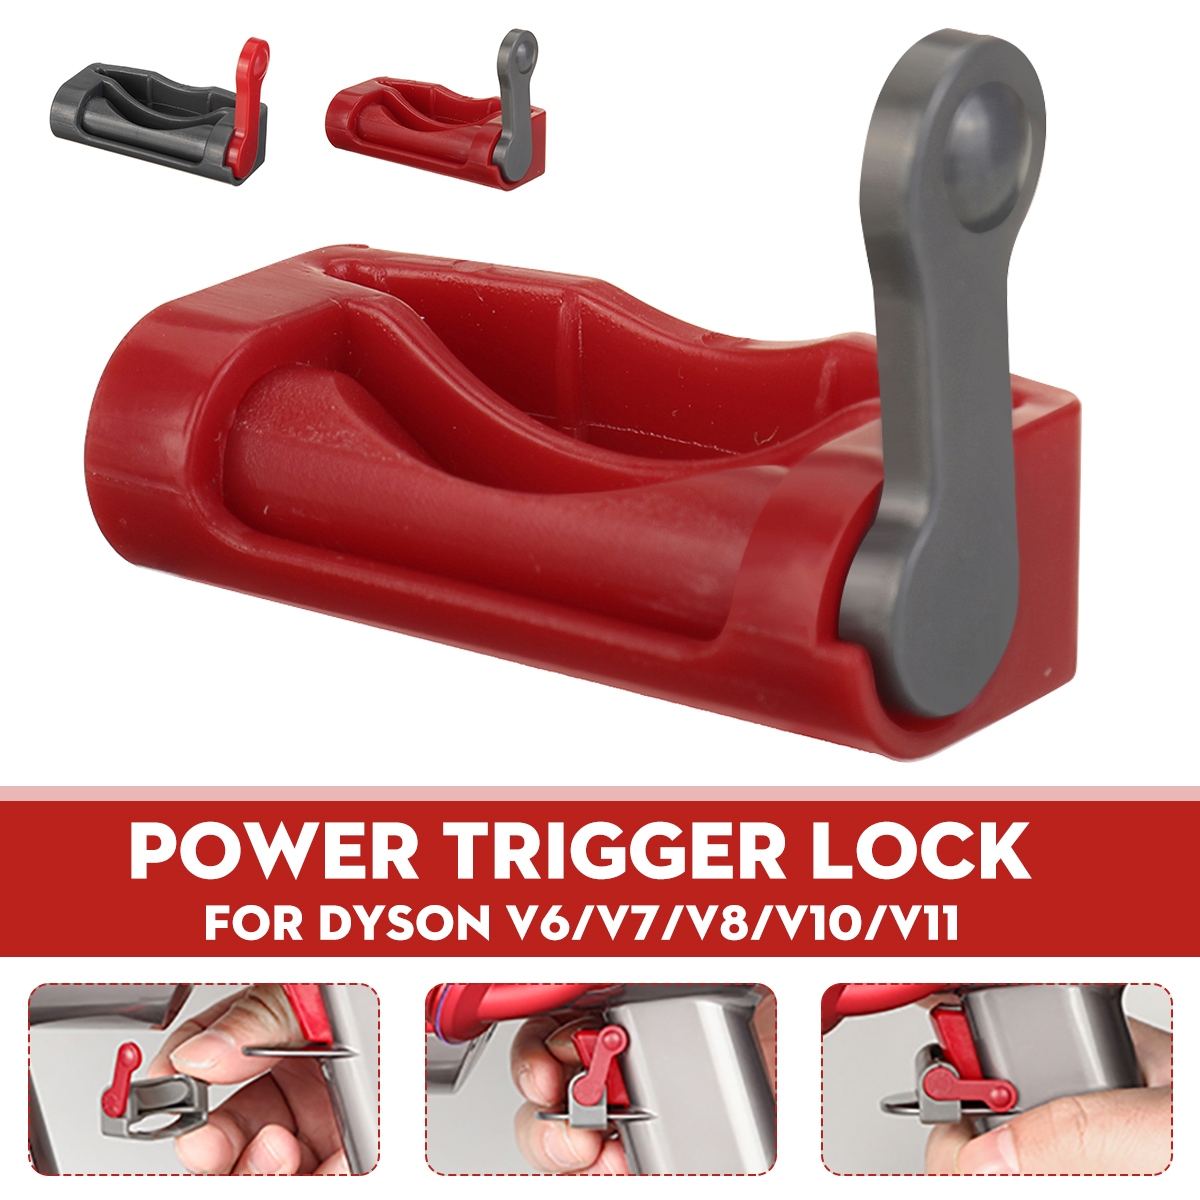 Find Trigger Lock Replacement for Dyson V6 V7 V8 V10 V11 Vacuum Cleaner [Not-original] for Sale on Gipsybee.com with cryptocurrencies